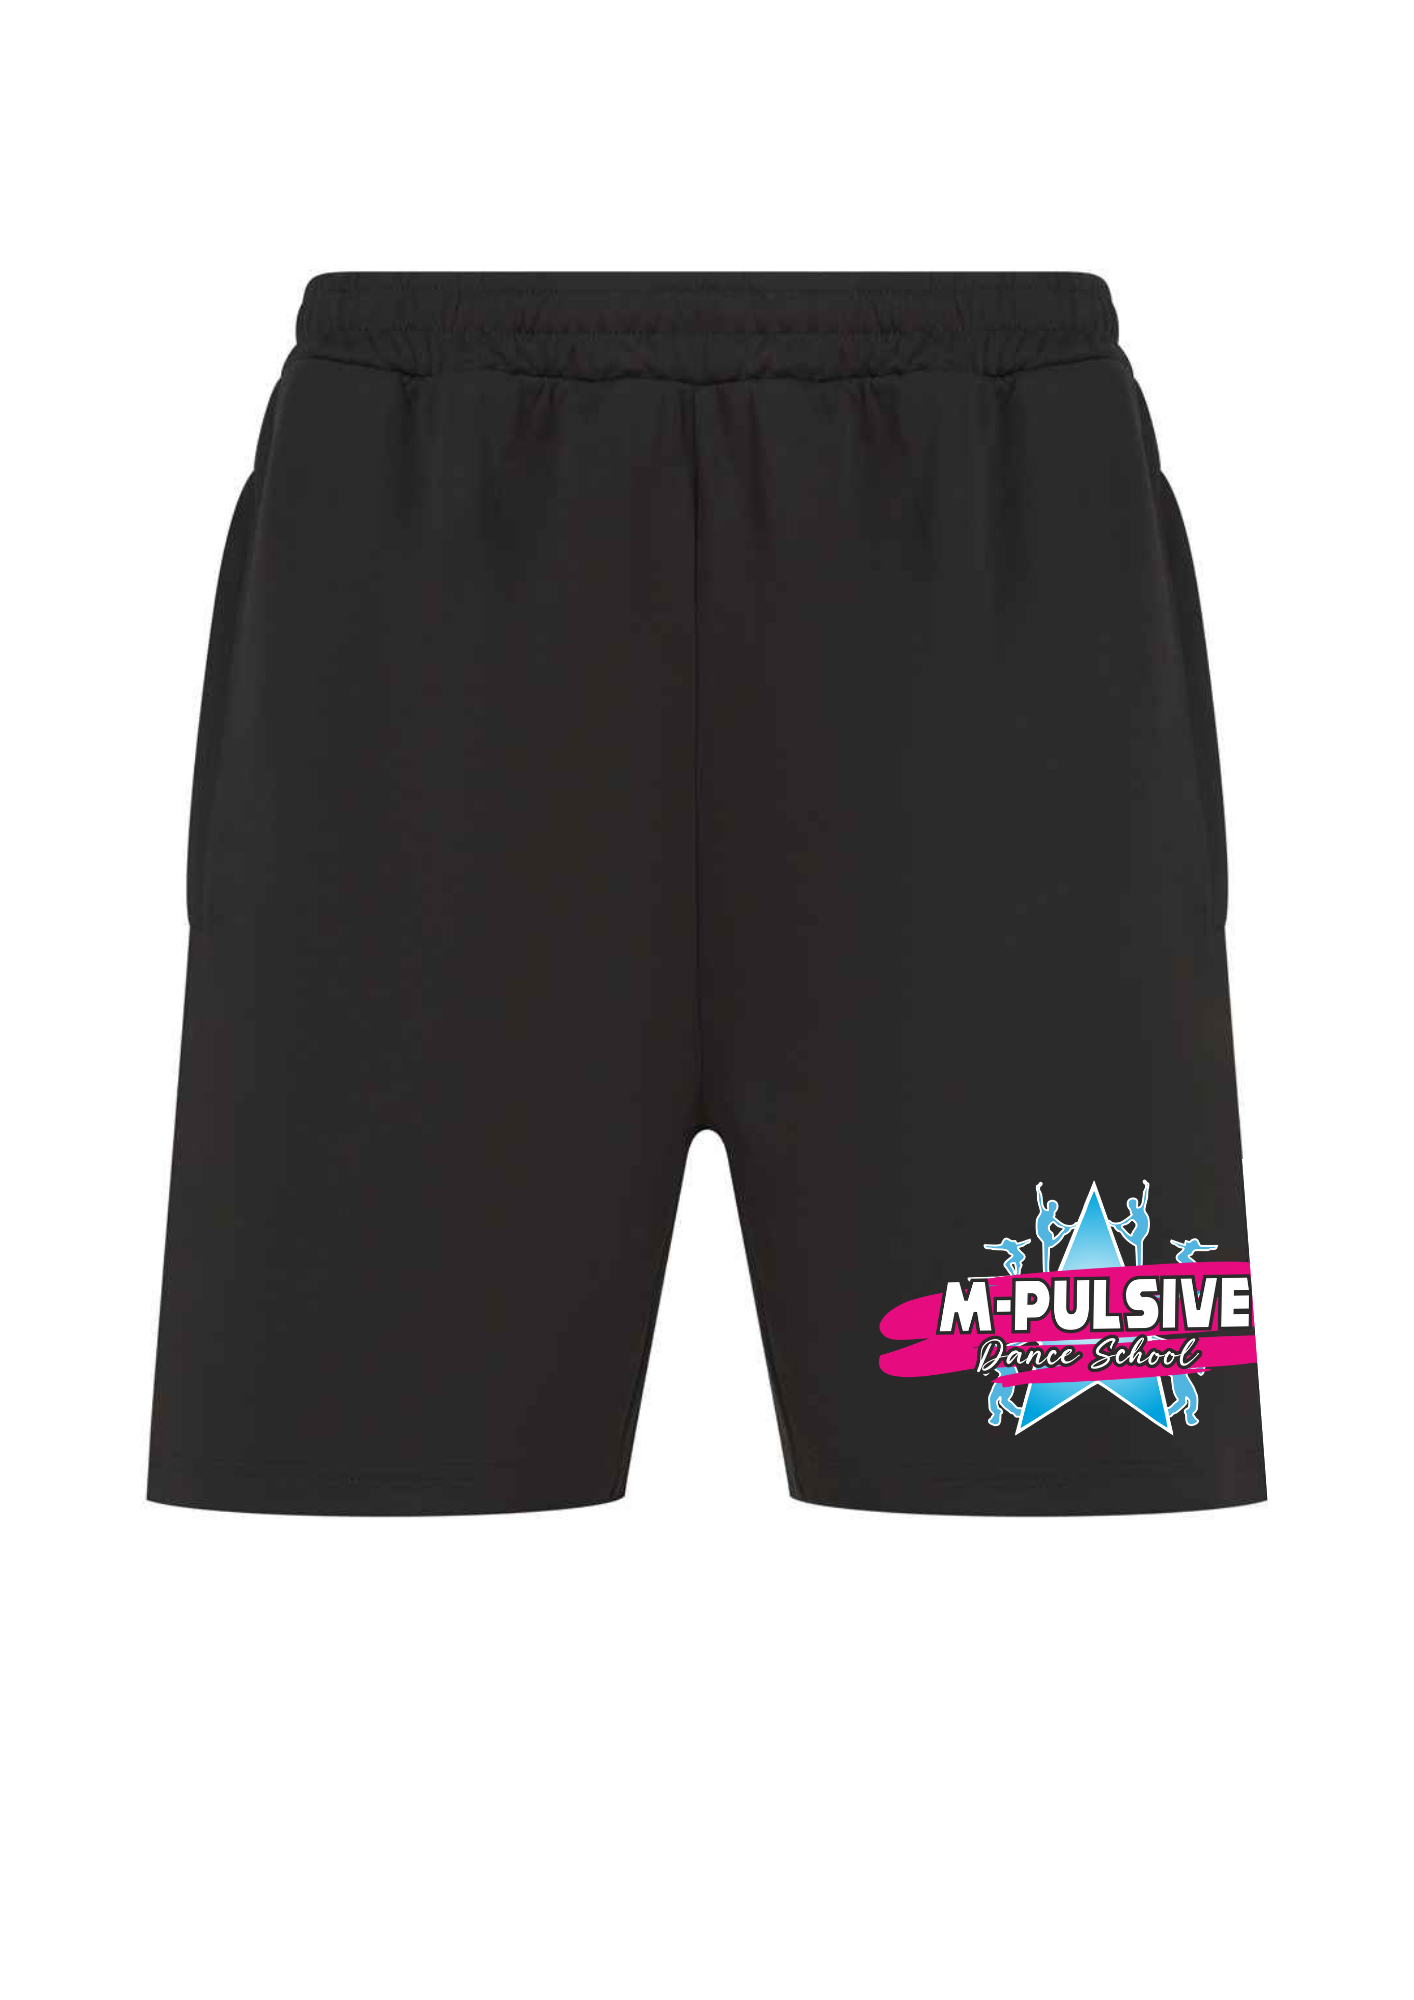 M-Pulsive Boys Shorts